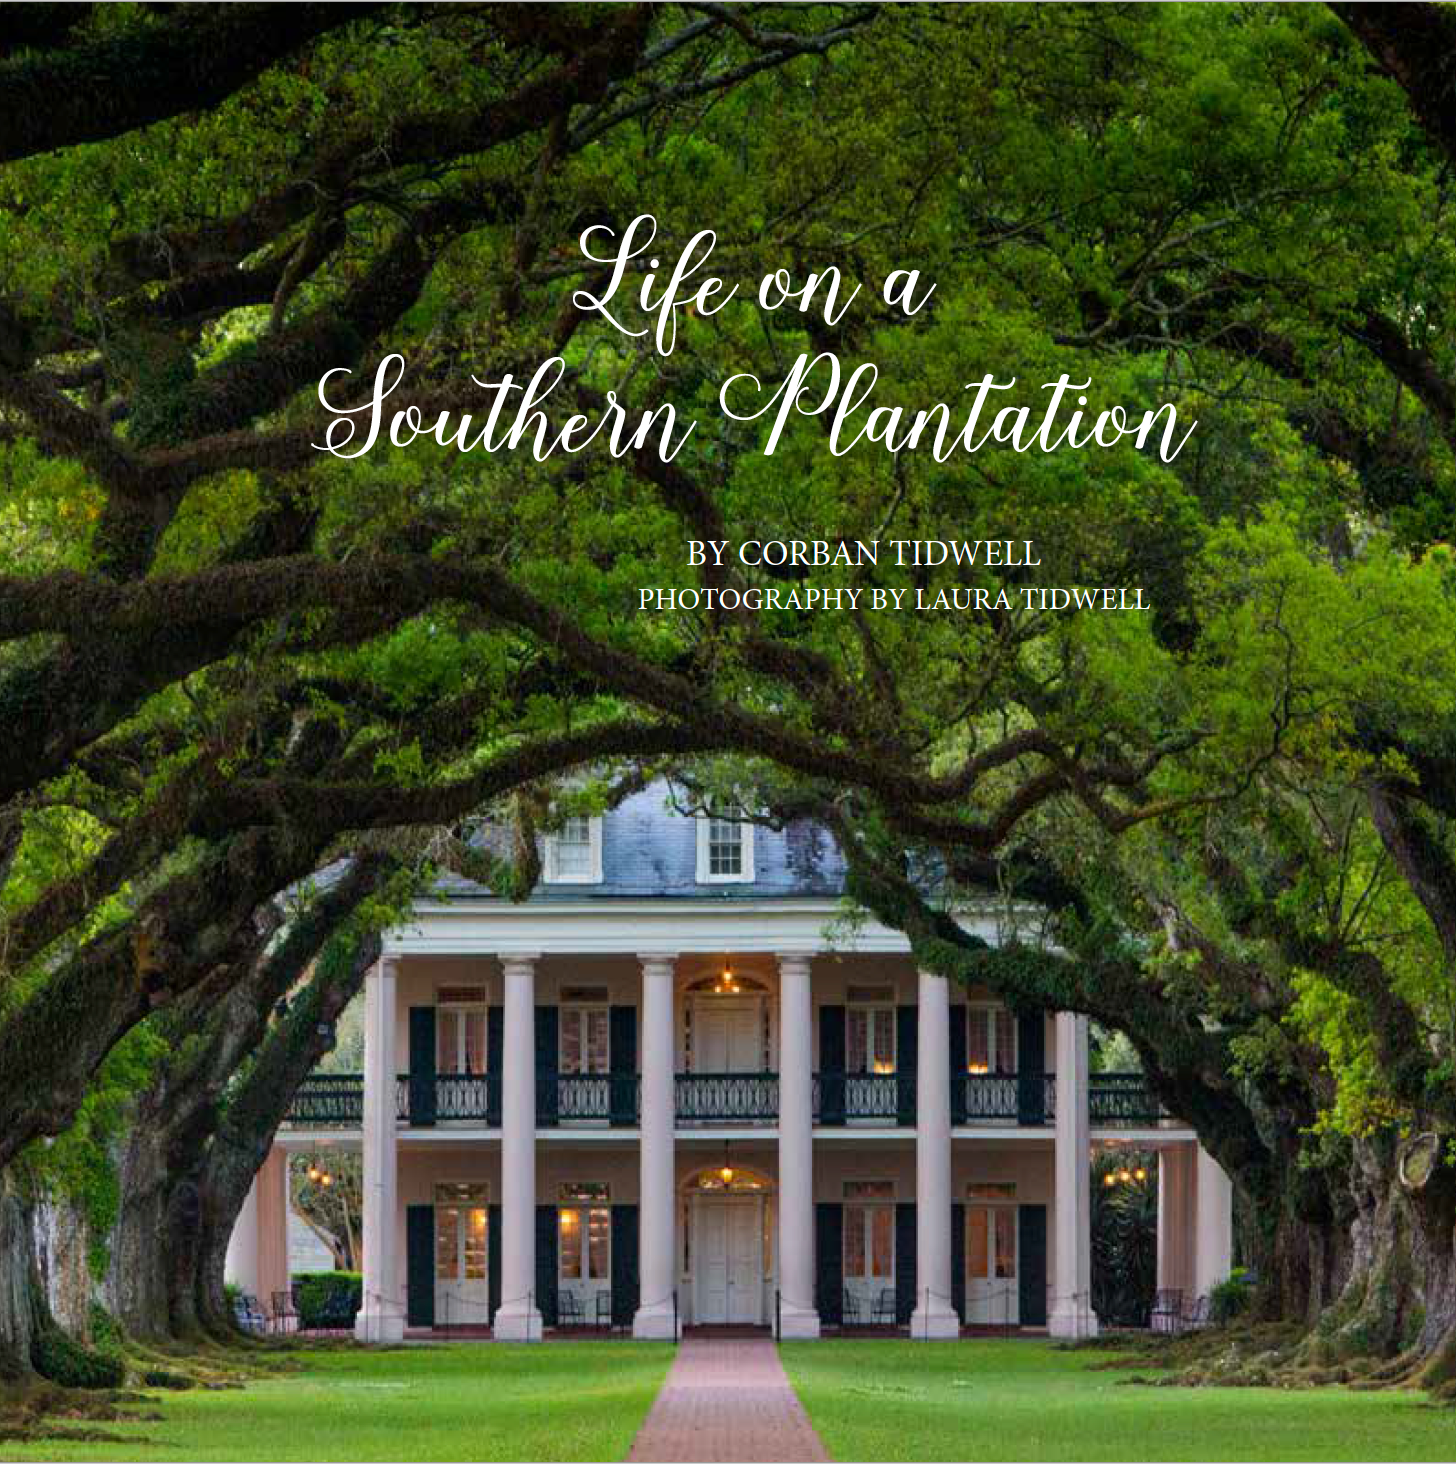 Life on a Southern Plantation